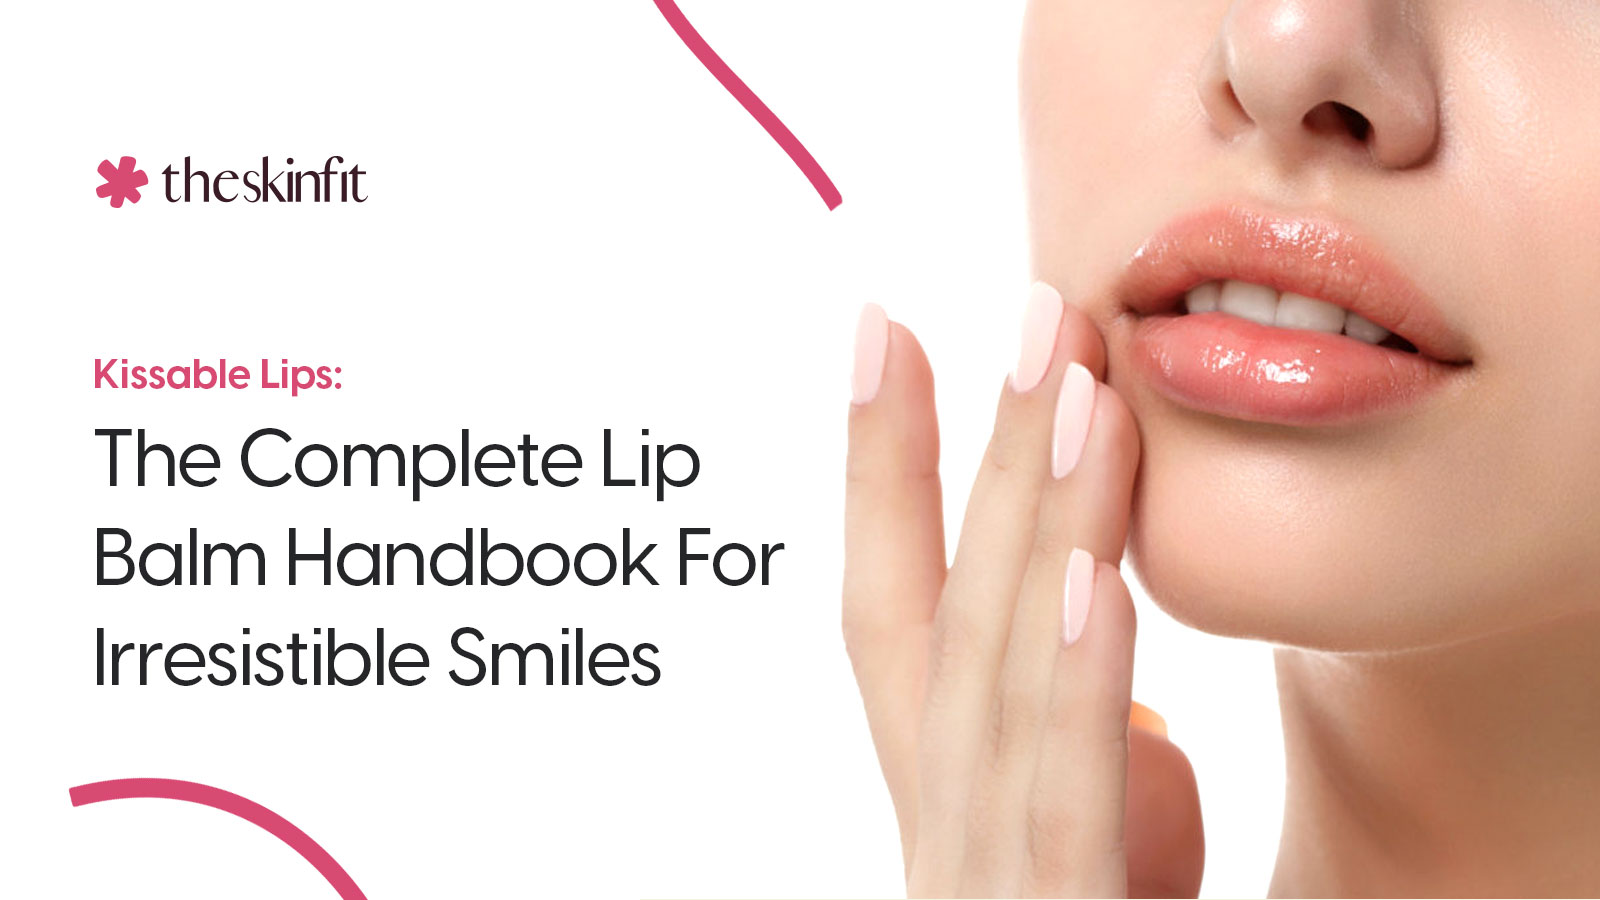 Kissable Lips: The Complete Lip Balm Handbook For Irresistible Smiles